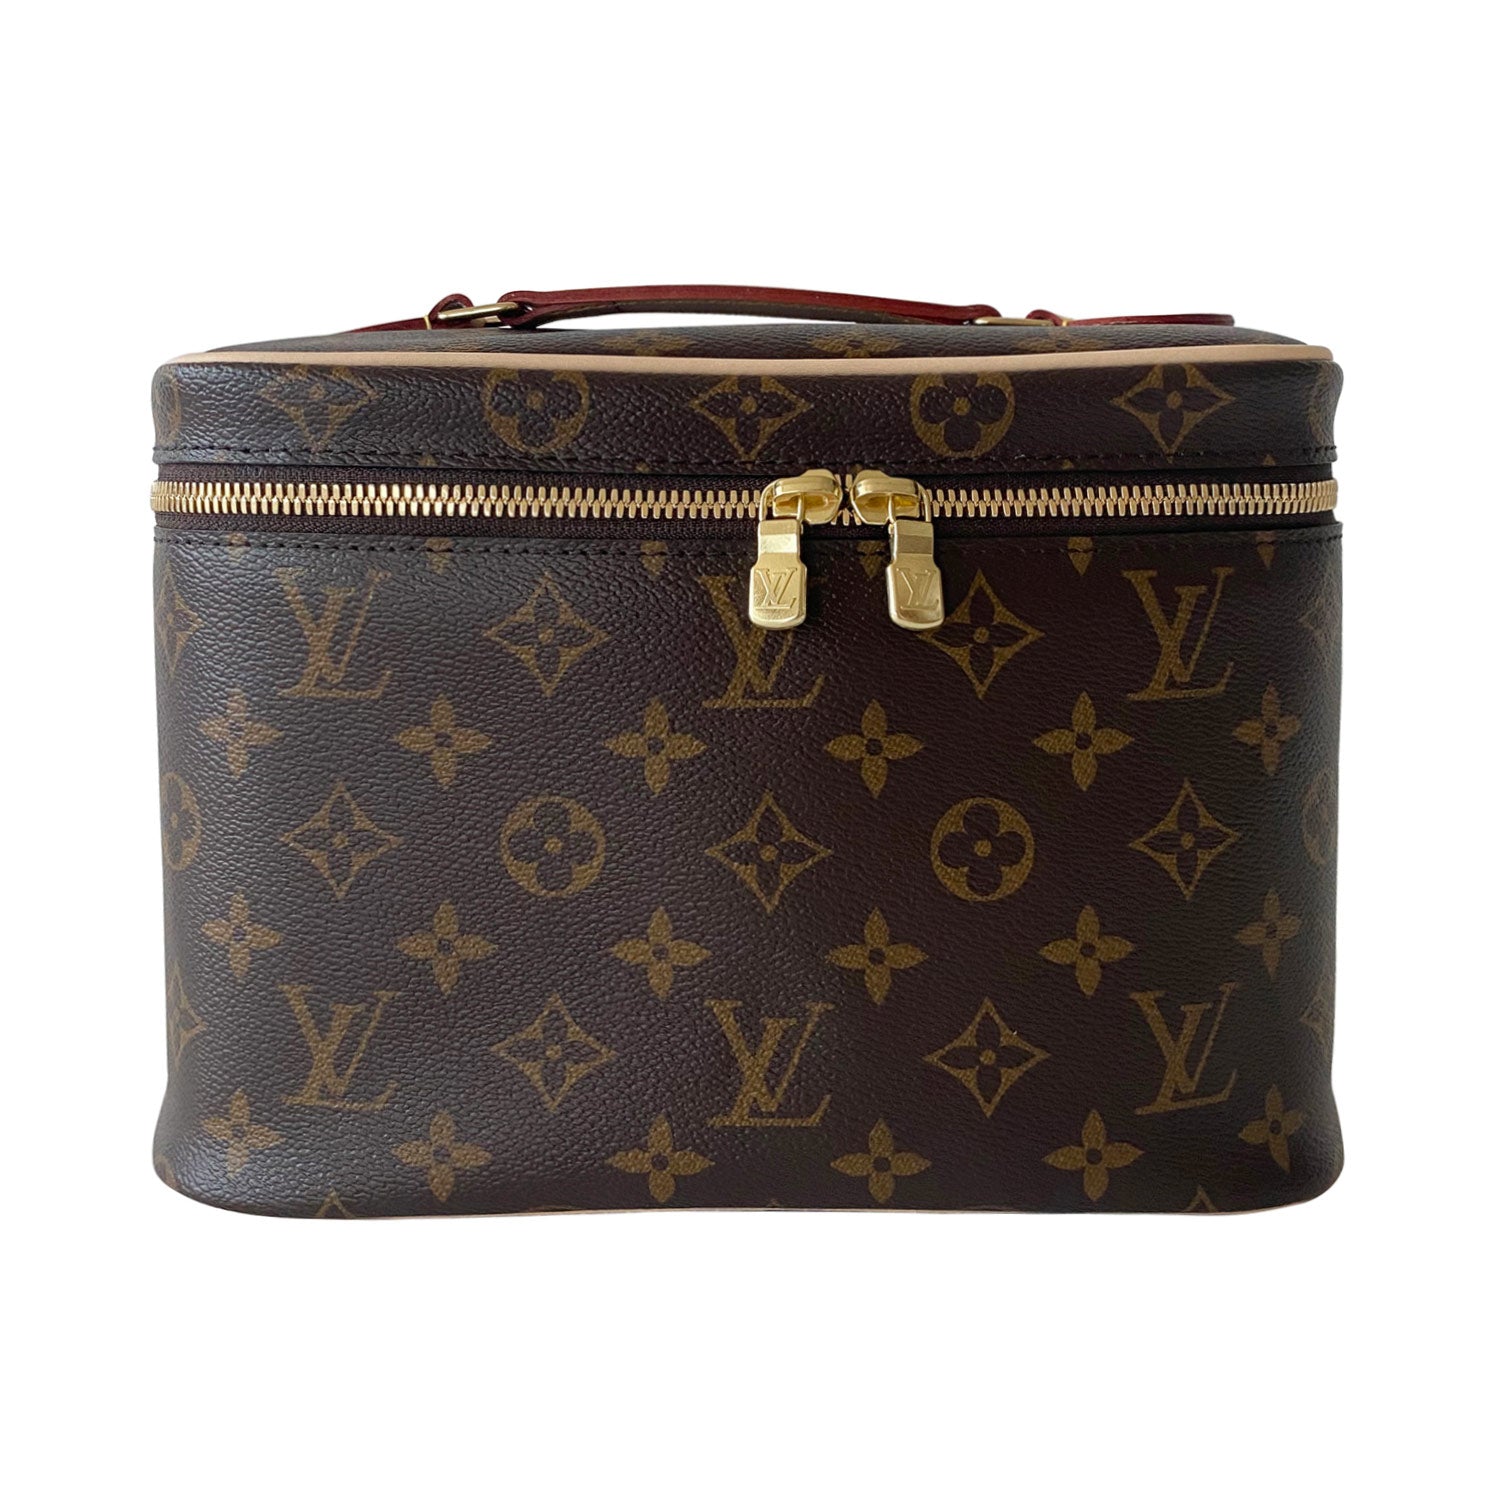 Shop authentic Louis Vuitton Monogram Nice BB Bag at for just USD 1,750.00